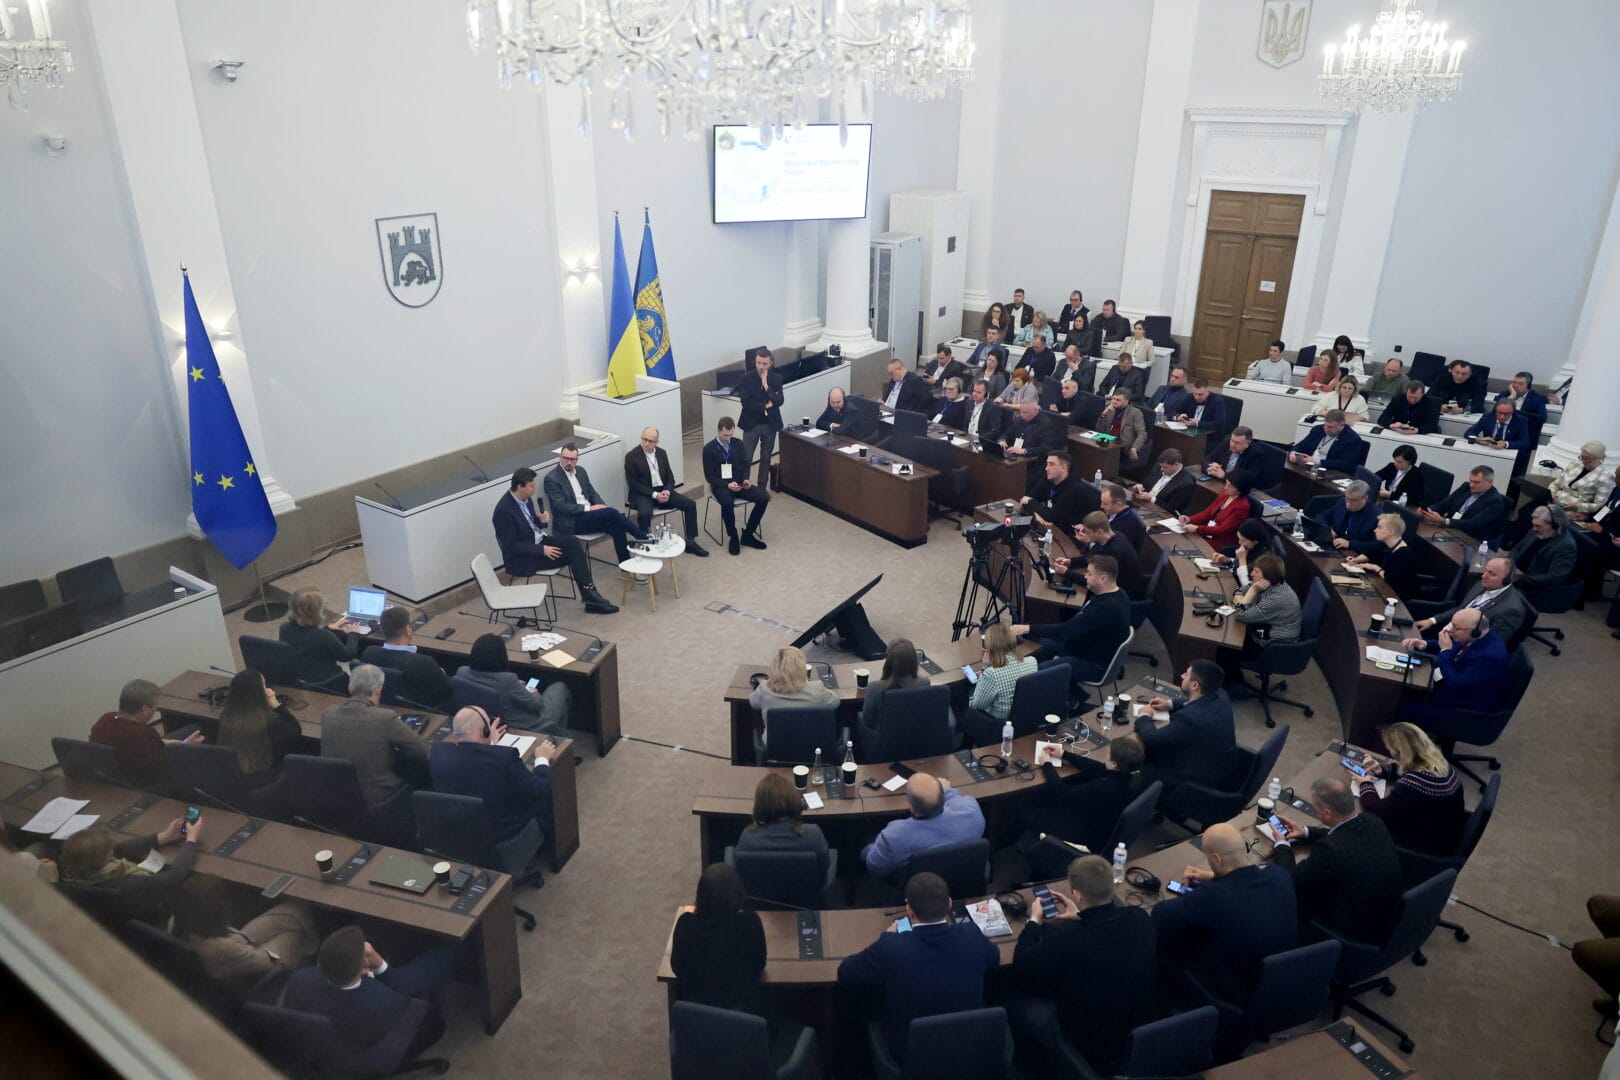 Speech by representatives of authorities at the Lviv Municipal Partnership Forum.